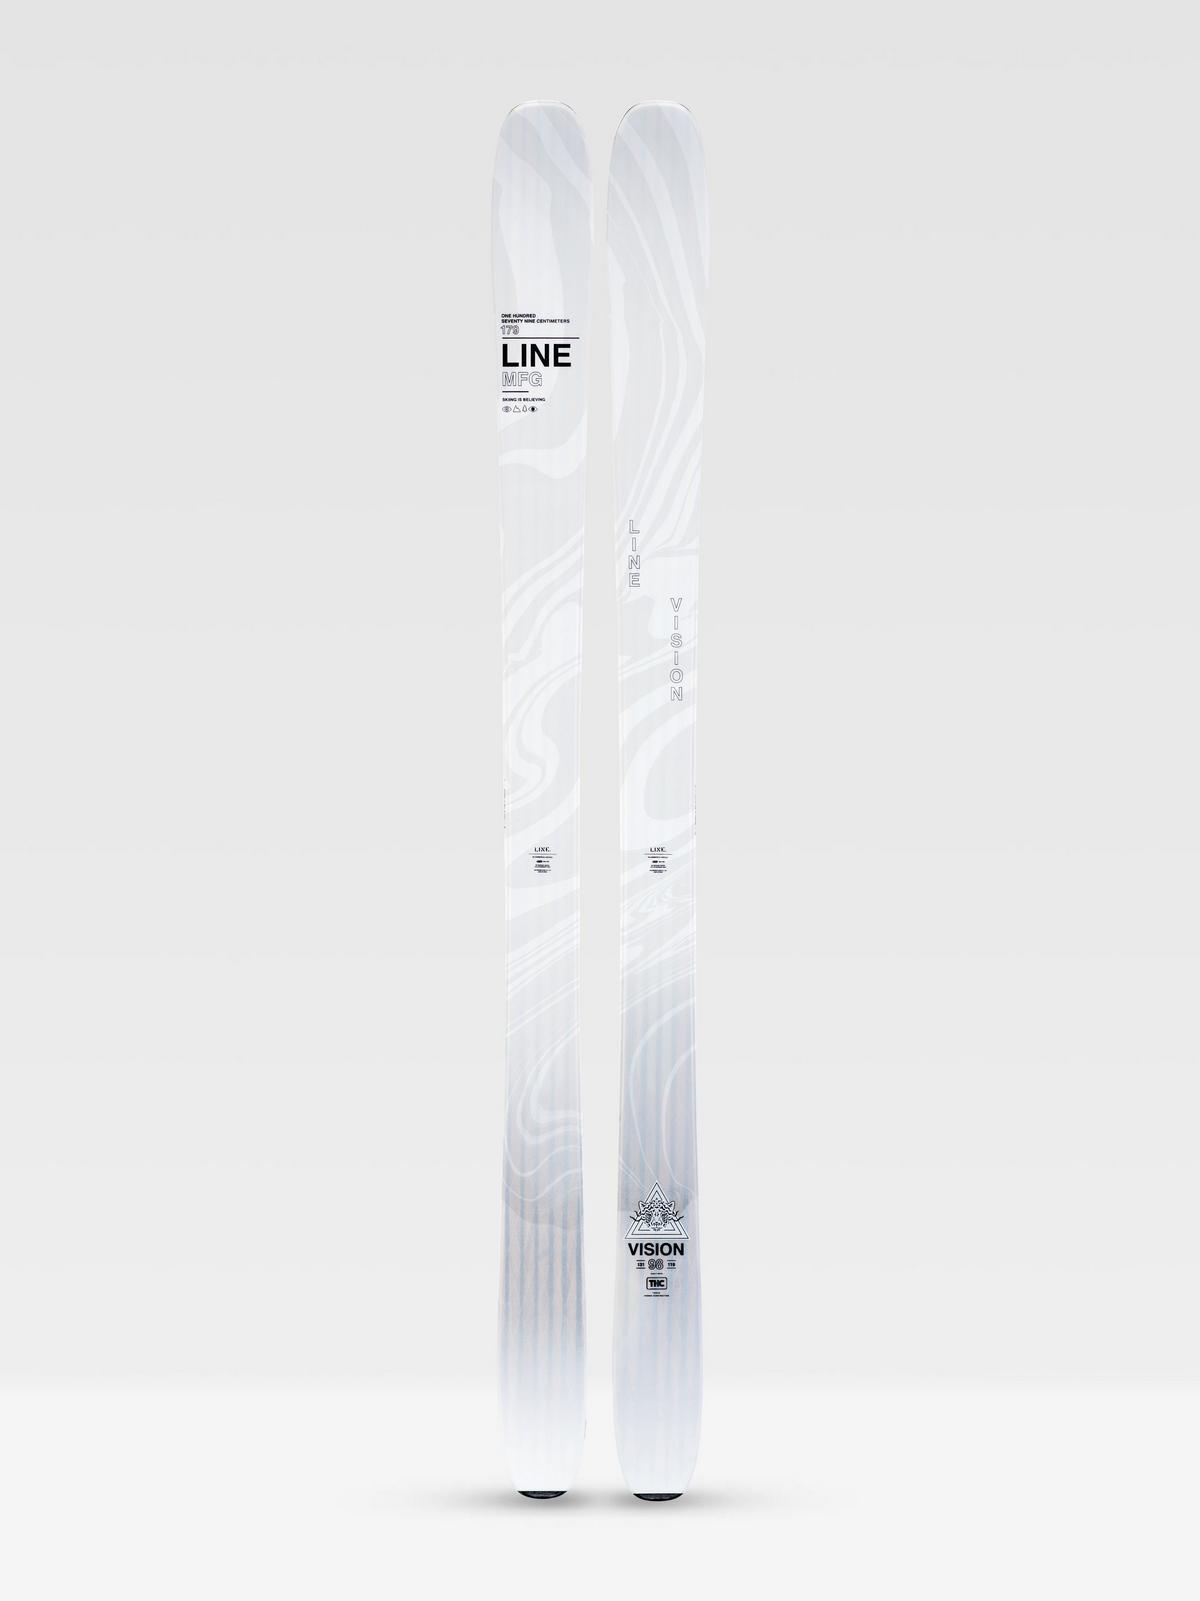 LINE Vision 98 Skis - All-new ski - The best lightweight ski for 